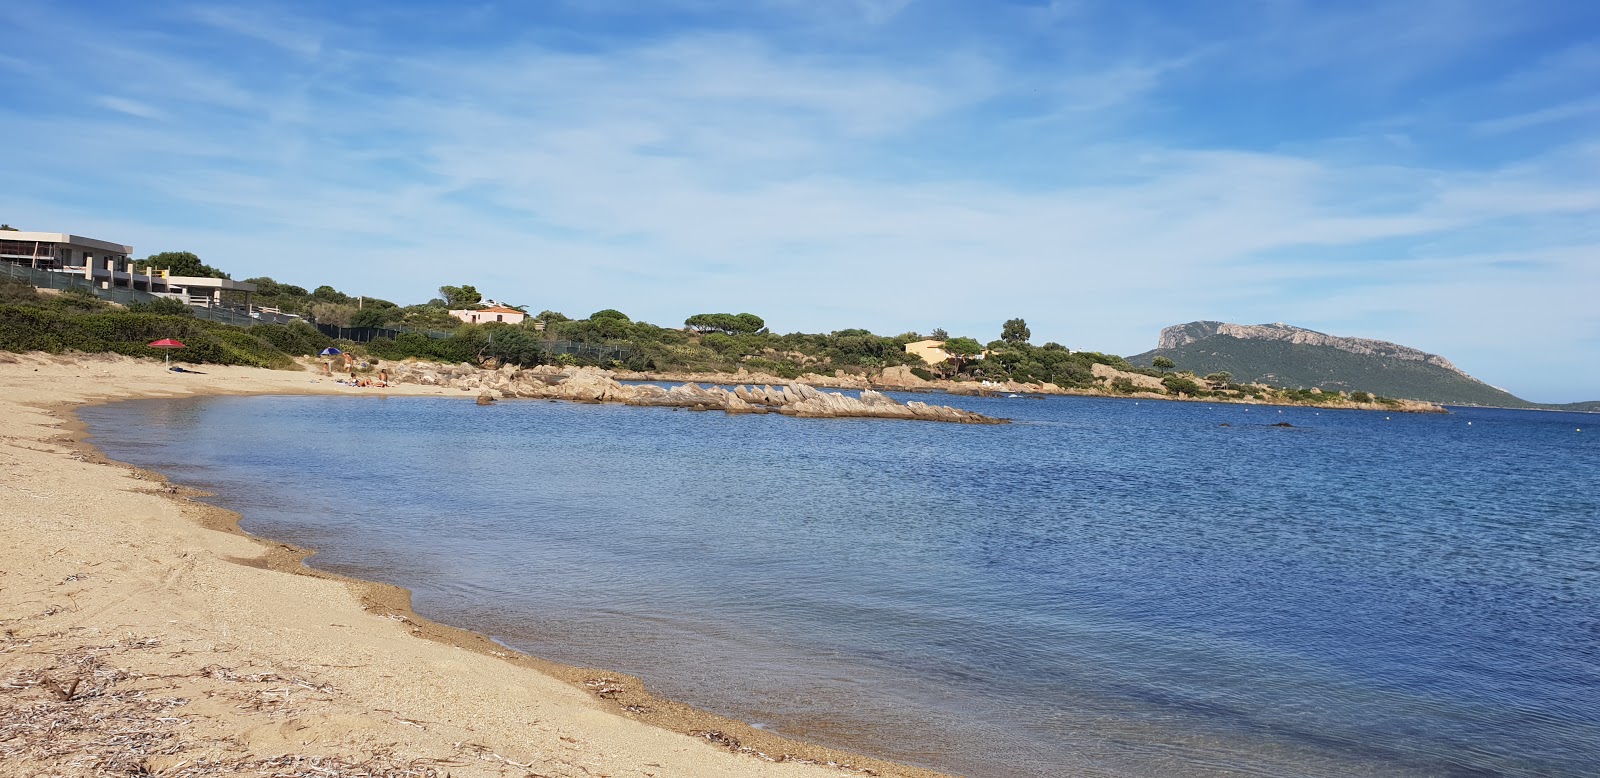 Photo de Spiaggia S'abba e sa Pedra avec petite baie